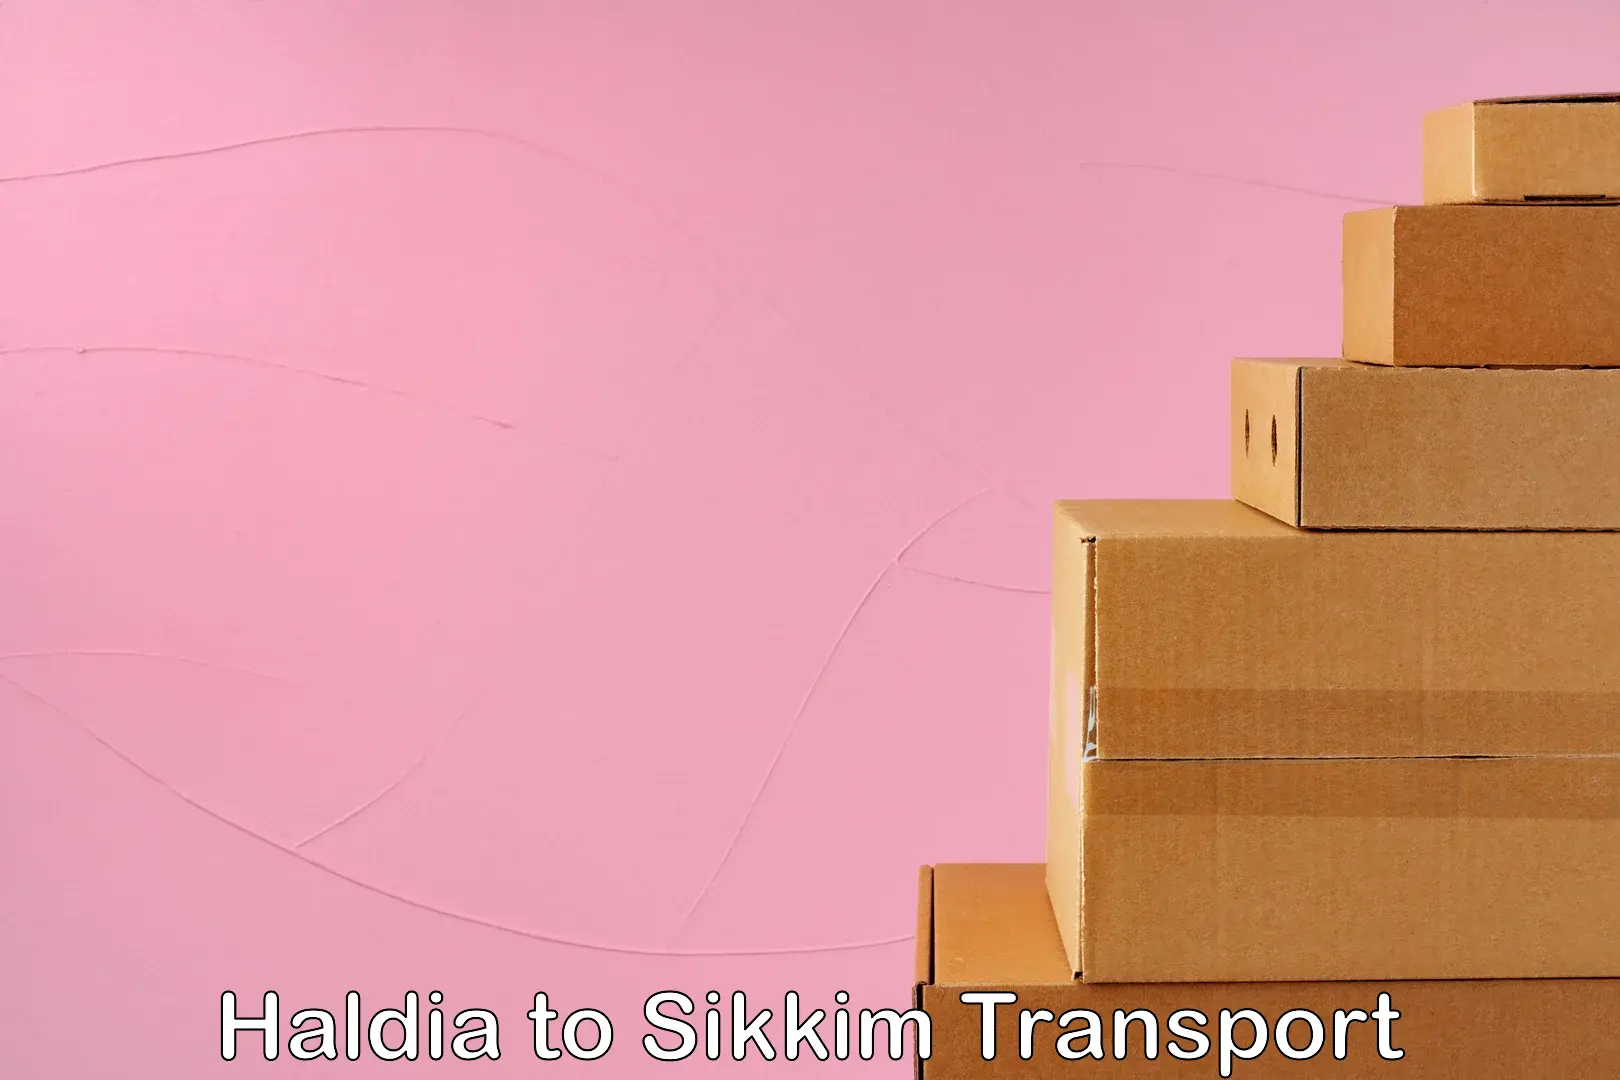 All India transport service Haldia to Jorethang